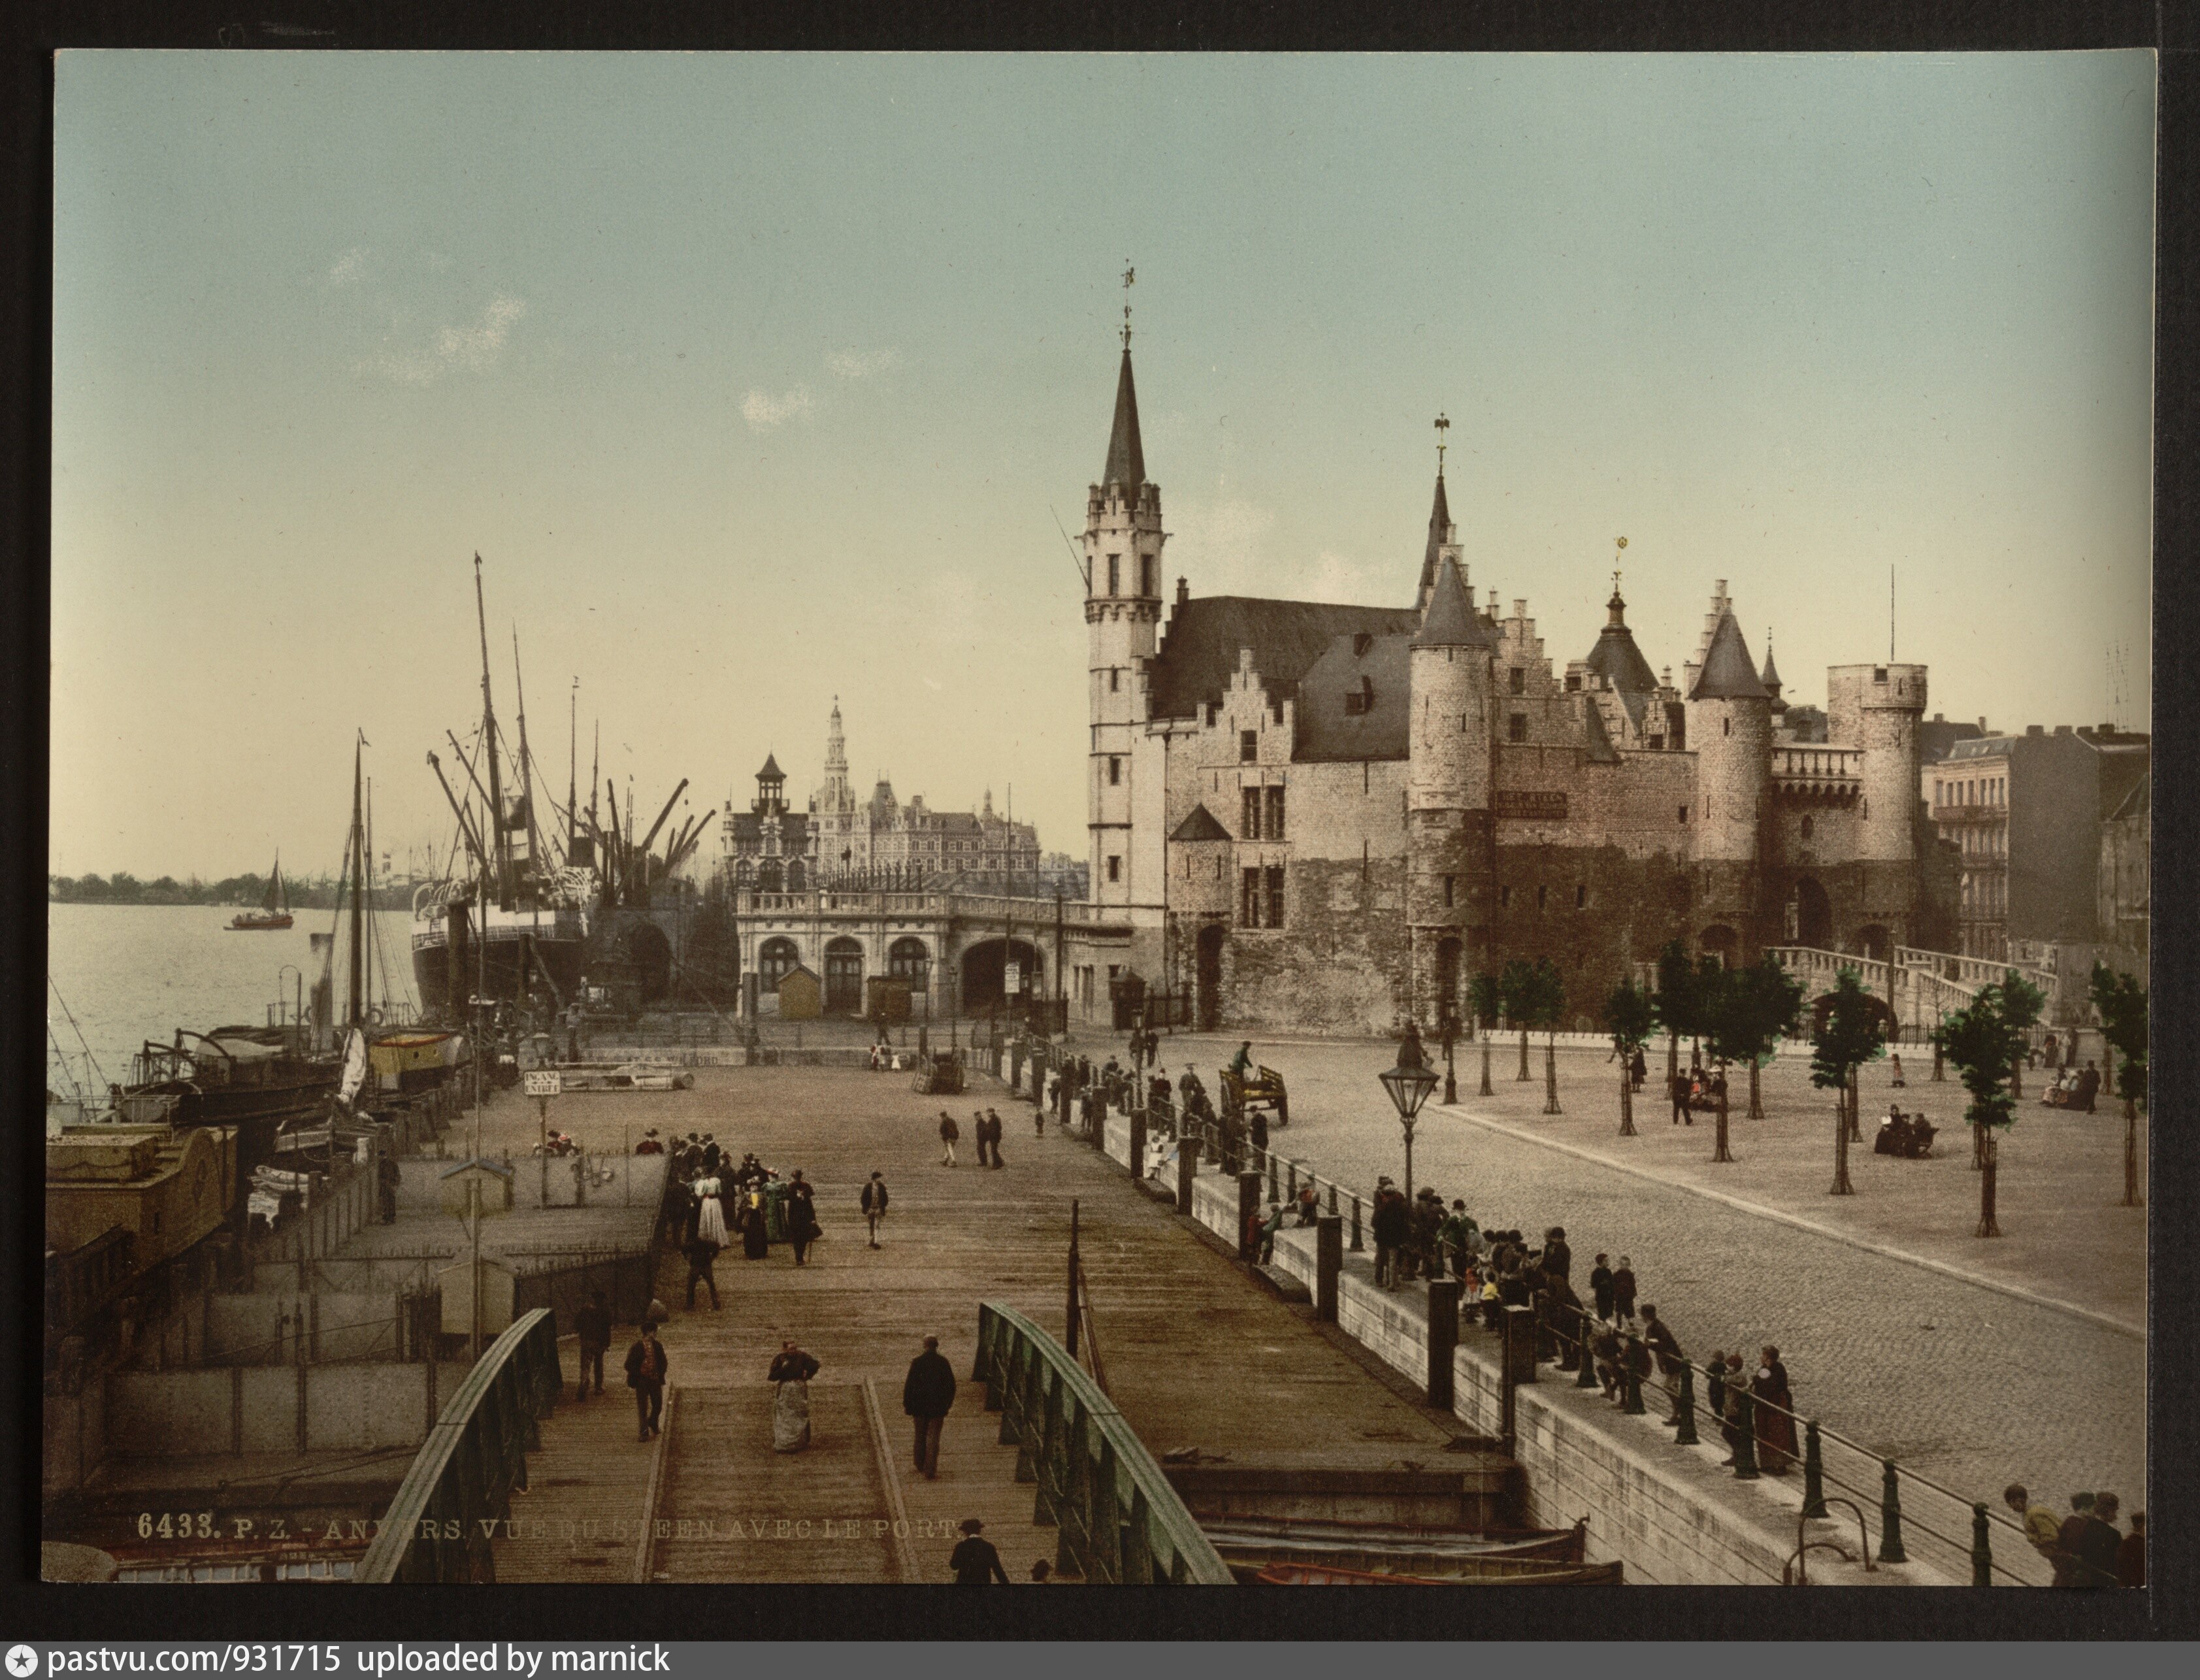 Европа 19 20 века. Антверпен 19 век. Бельгия 20 век. Порт Антверпен 1900. Антверпен порт 18 века.